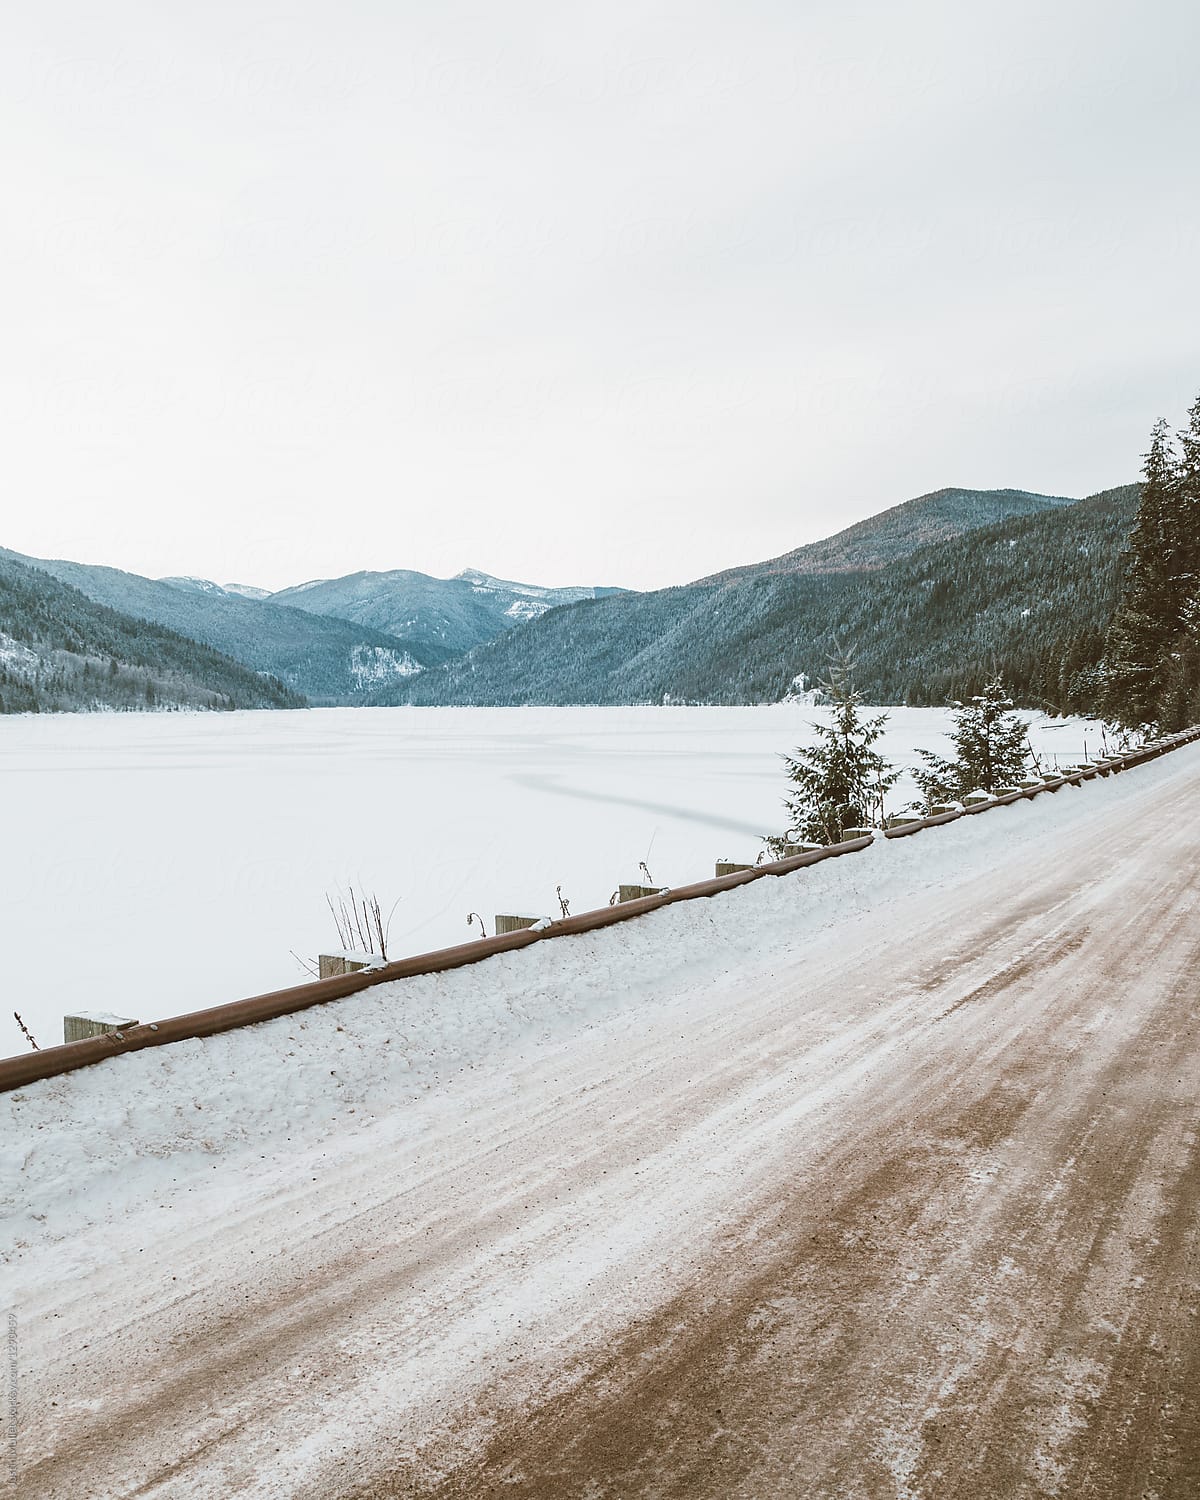 Sanded winter road in northeastern Washington.